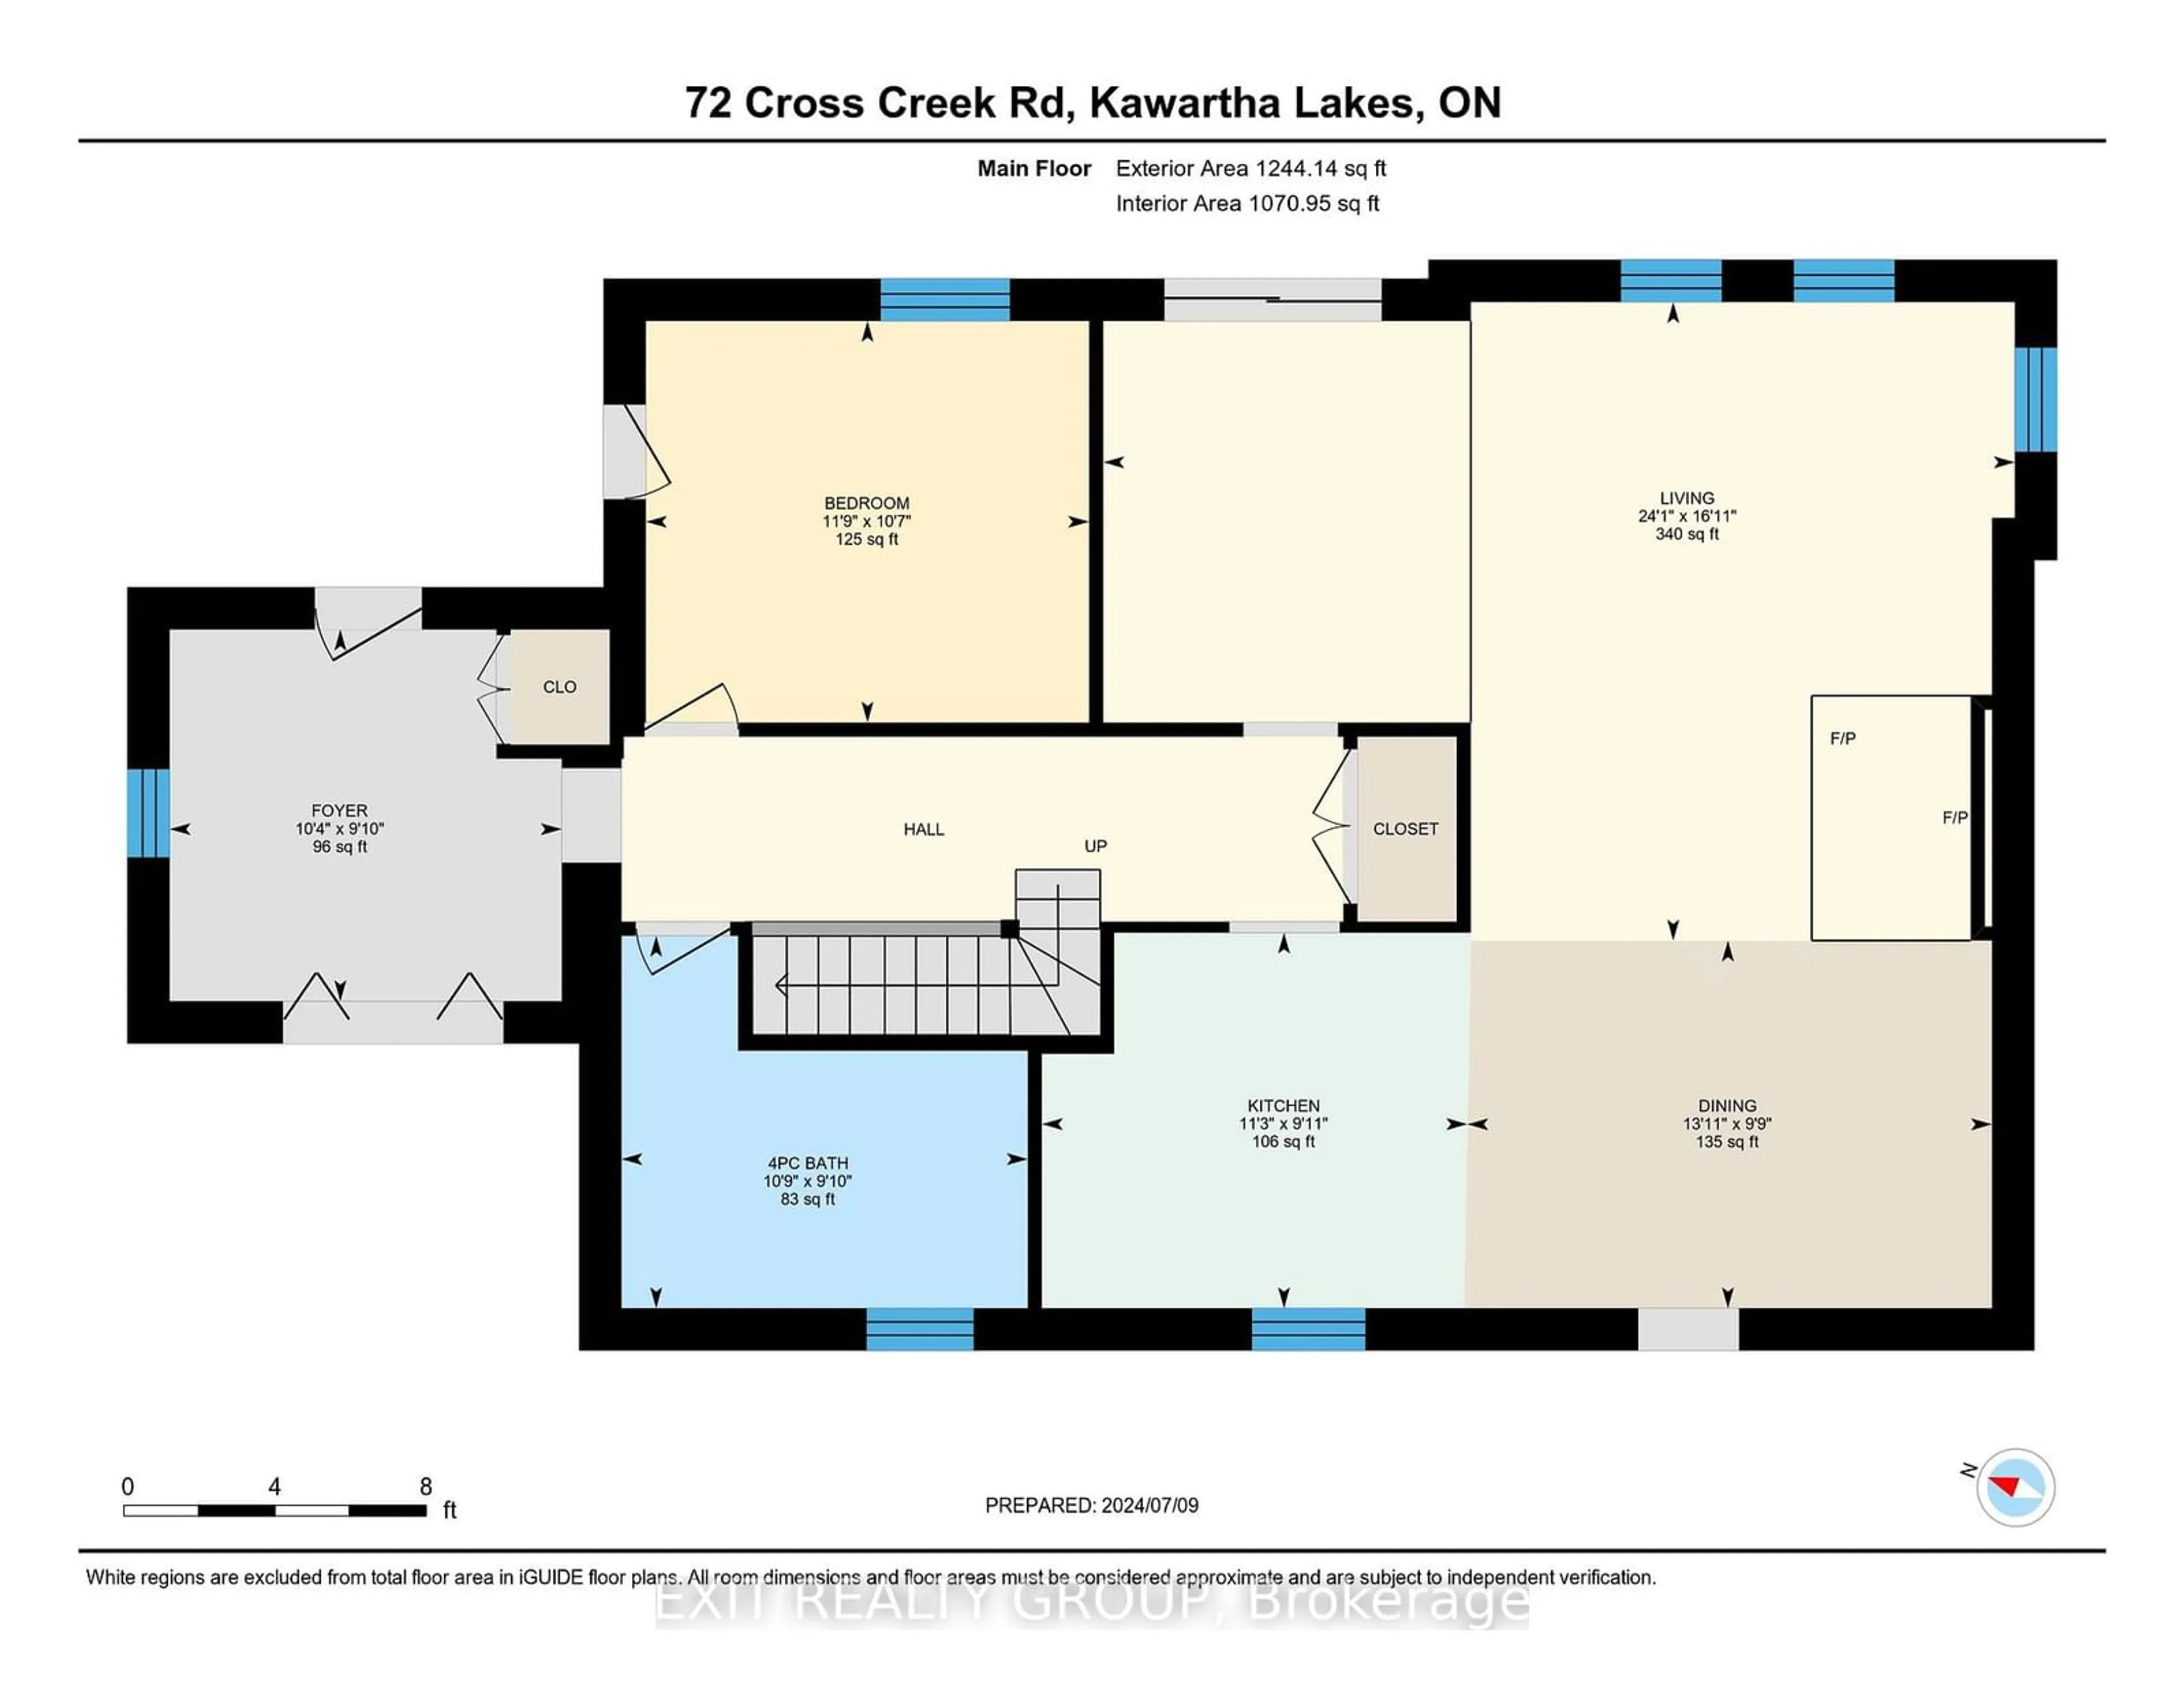 Floor plan for 76 Cross Creek Rd, Kawartha Lakes Ontario K9V 4R2